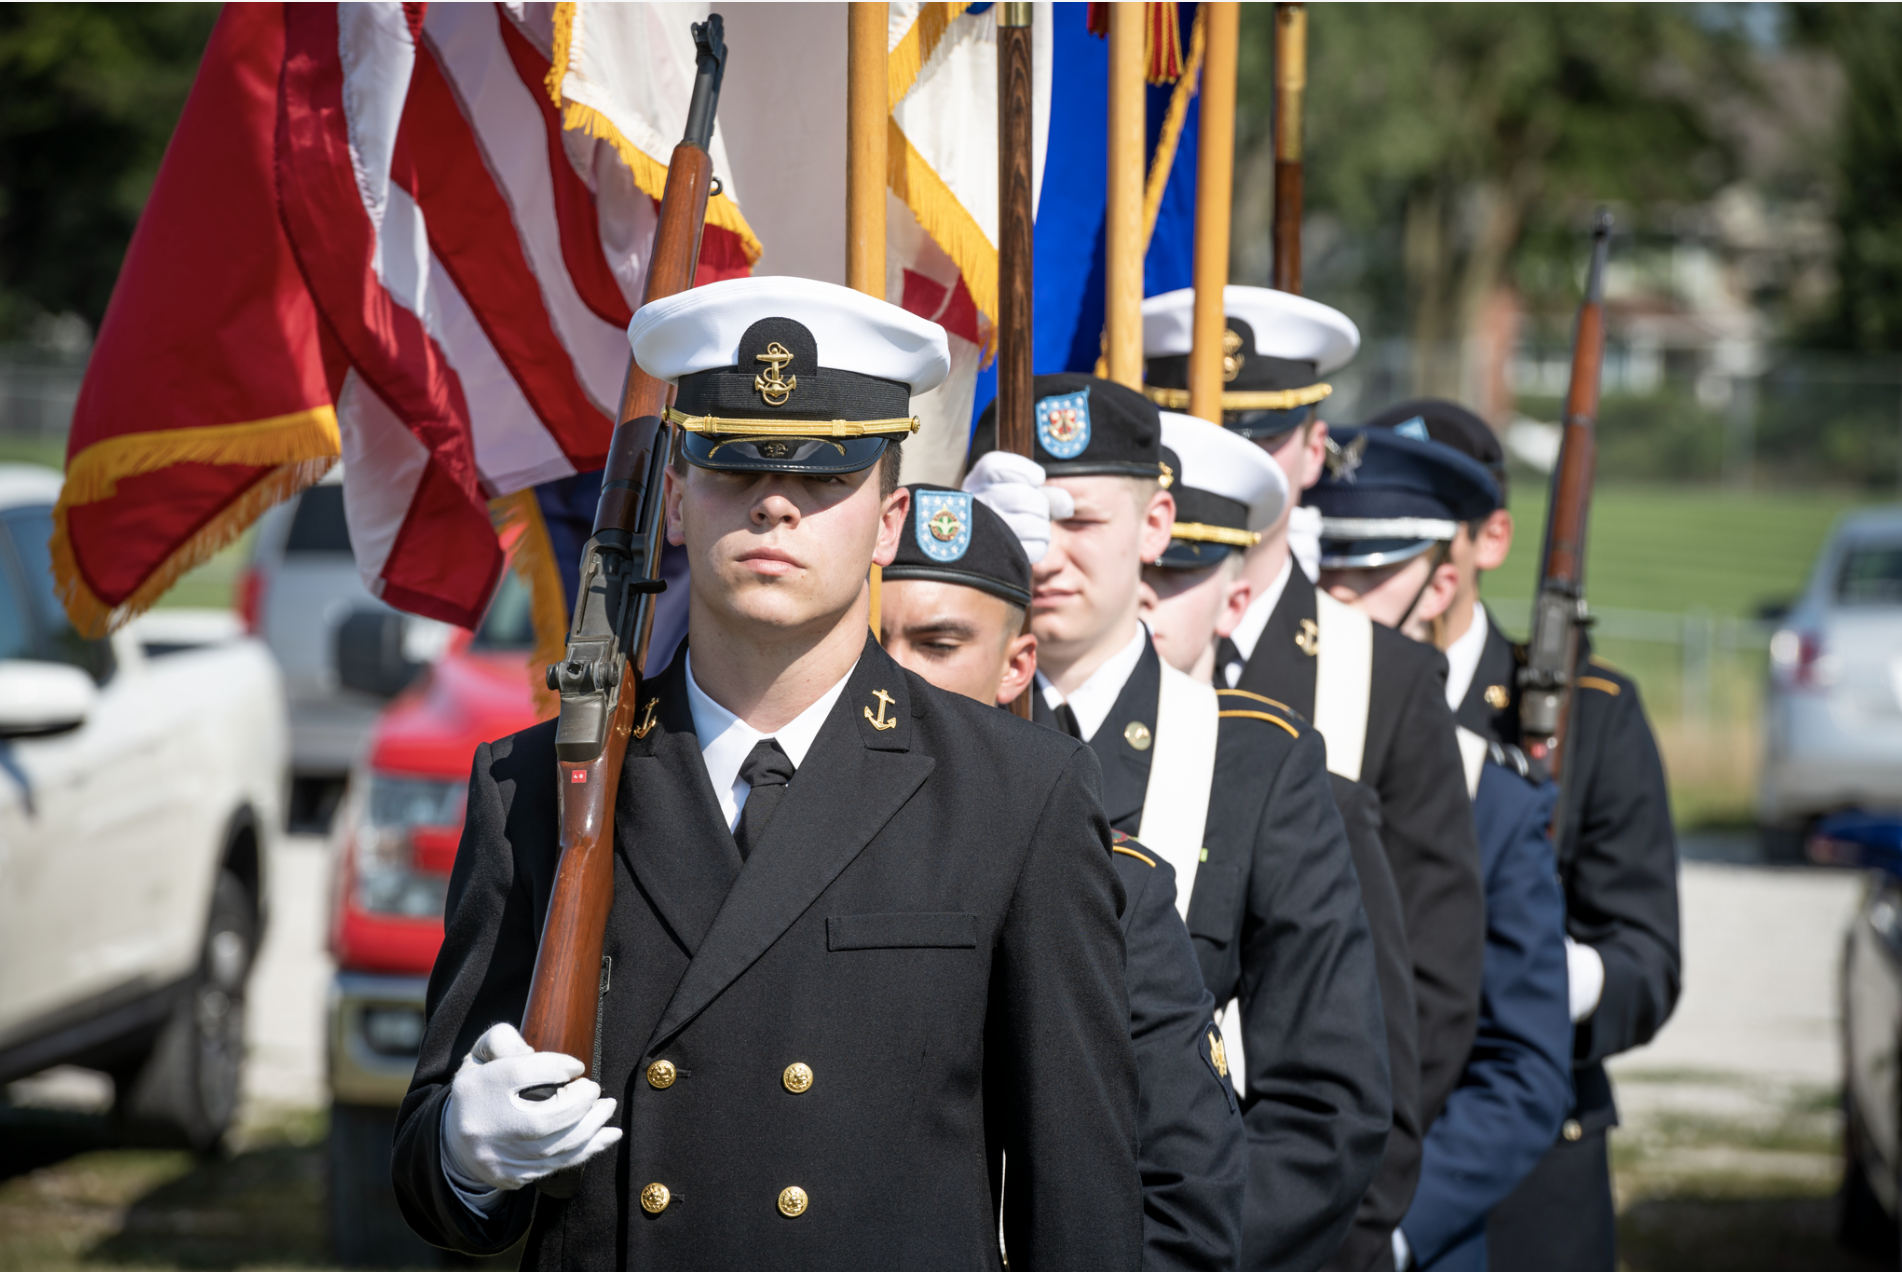 Members of ISU ROTC performing color guard, carrying flags